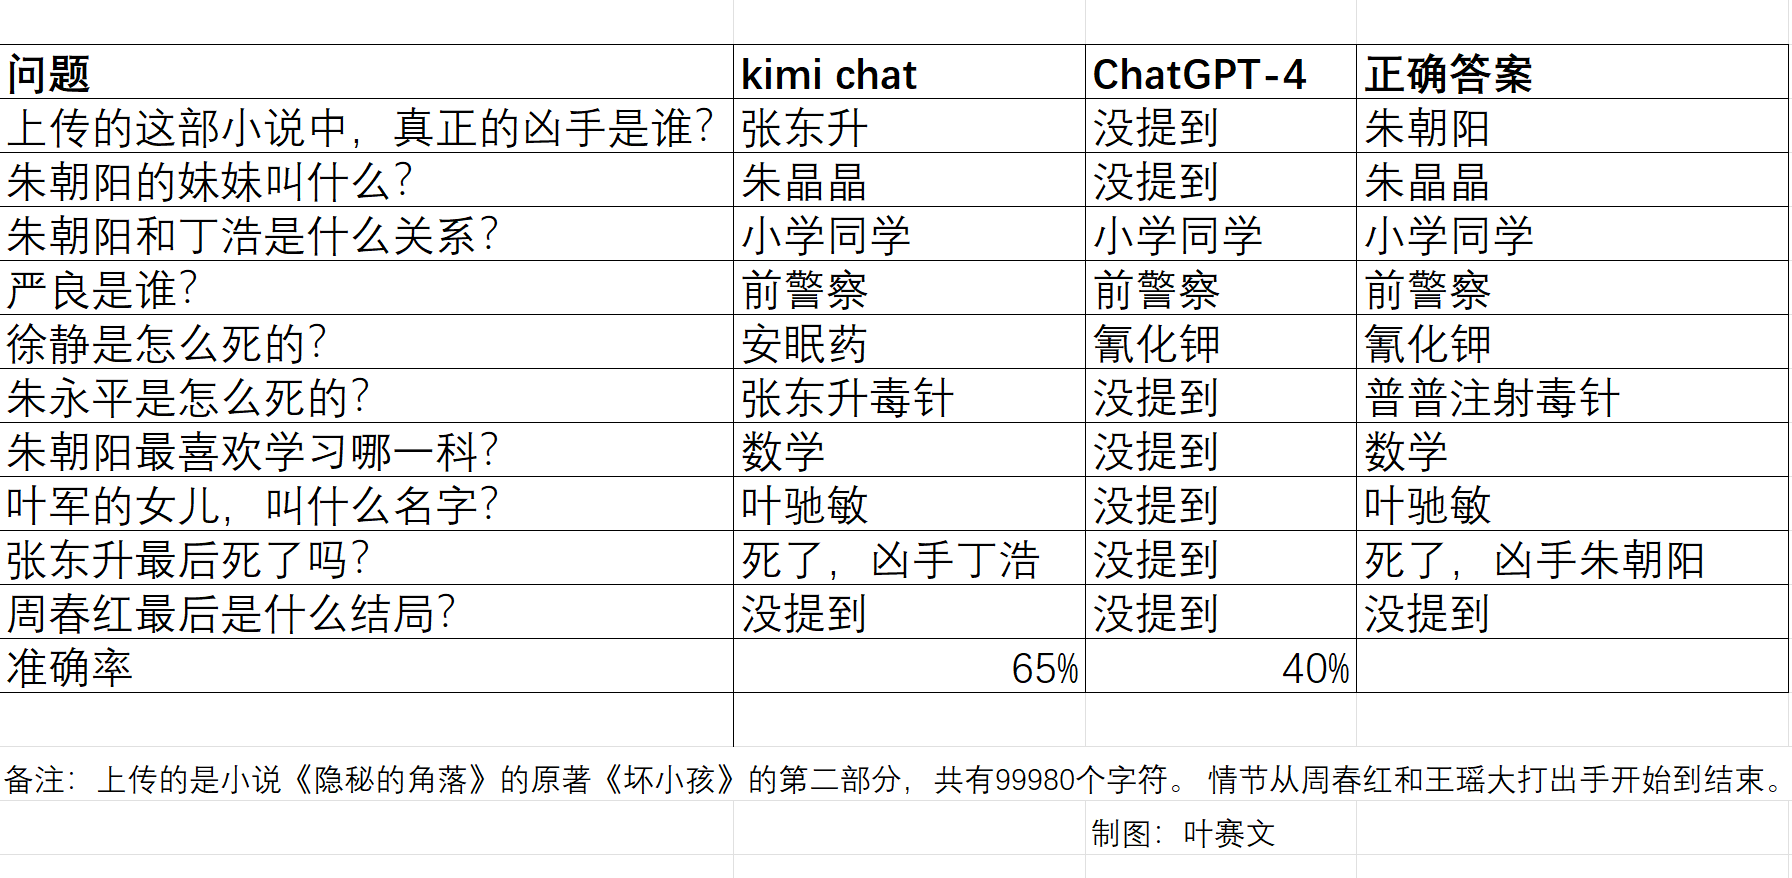 Kimichat 与 ChatGPT4 长文处理对比